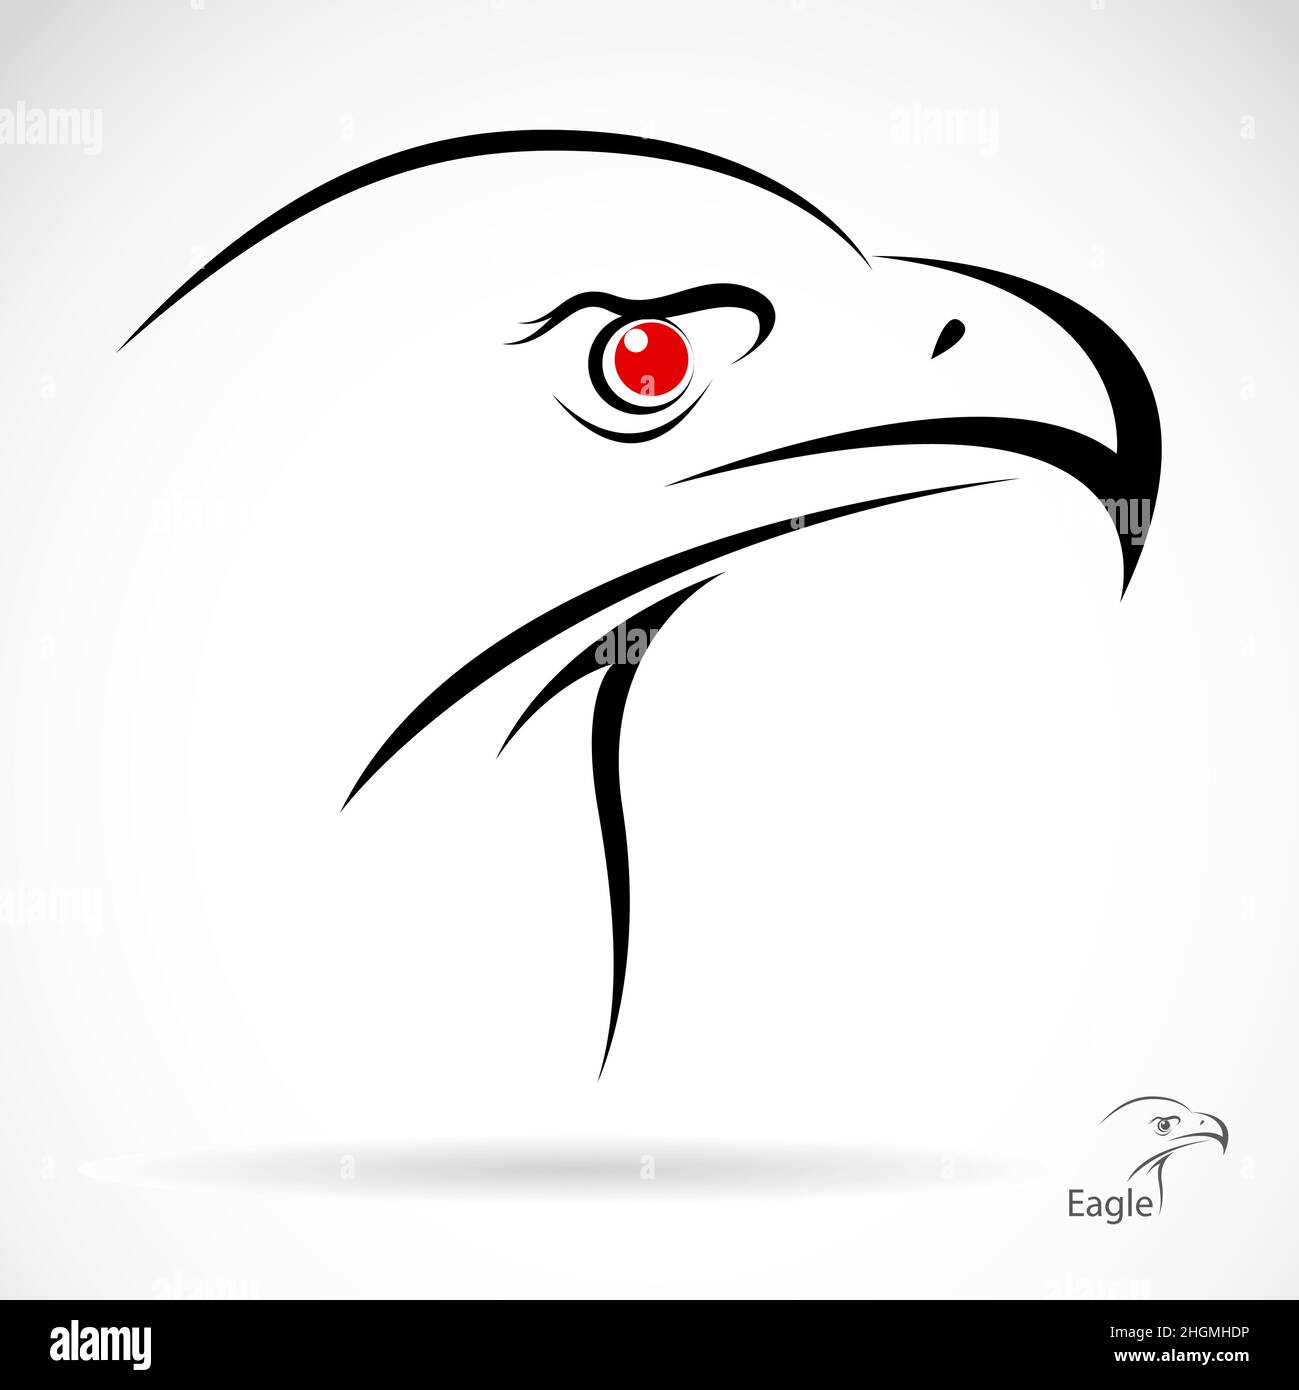 ArtStation - Falcon